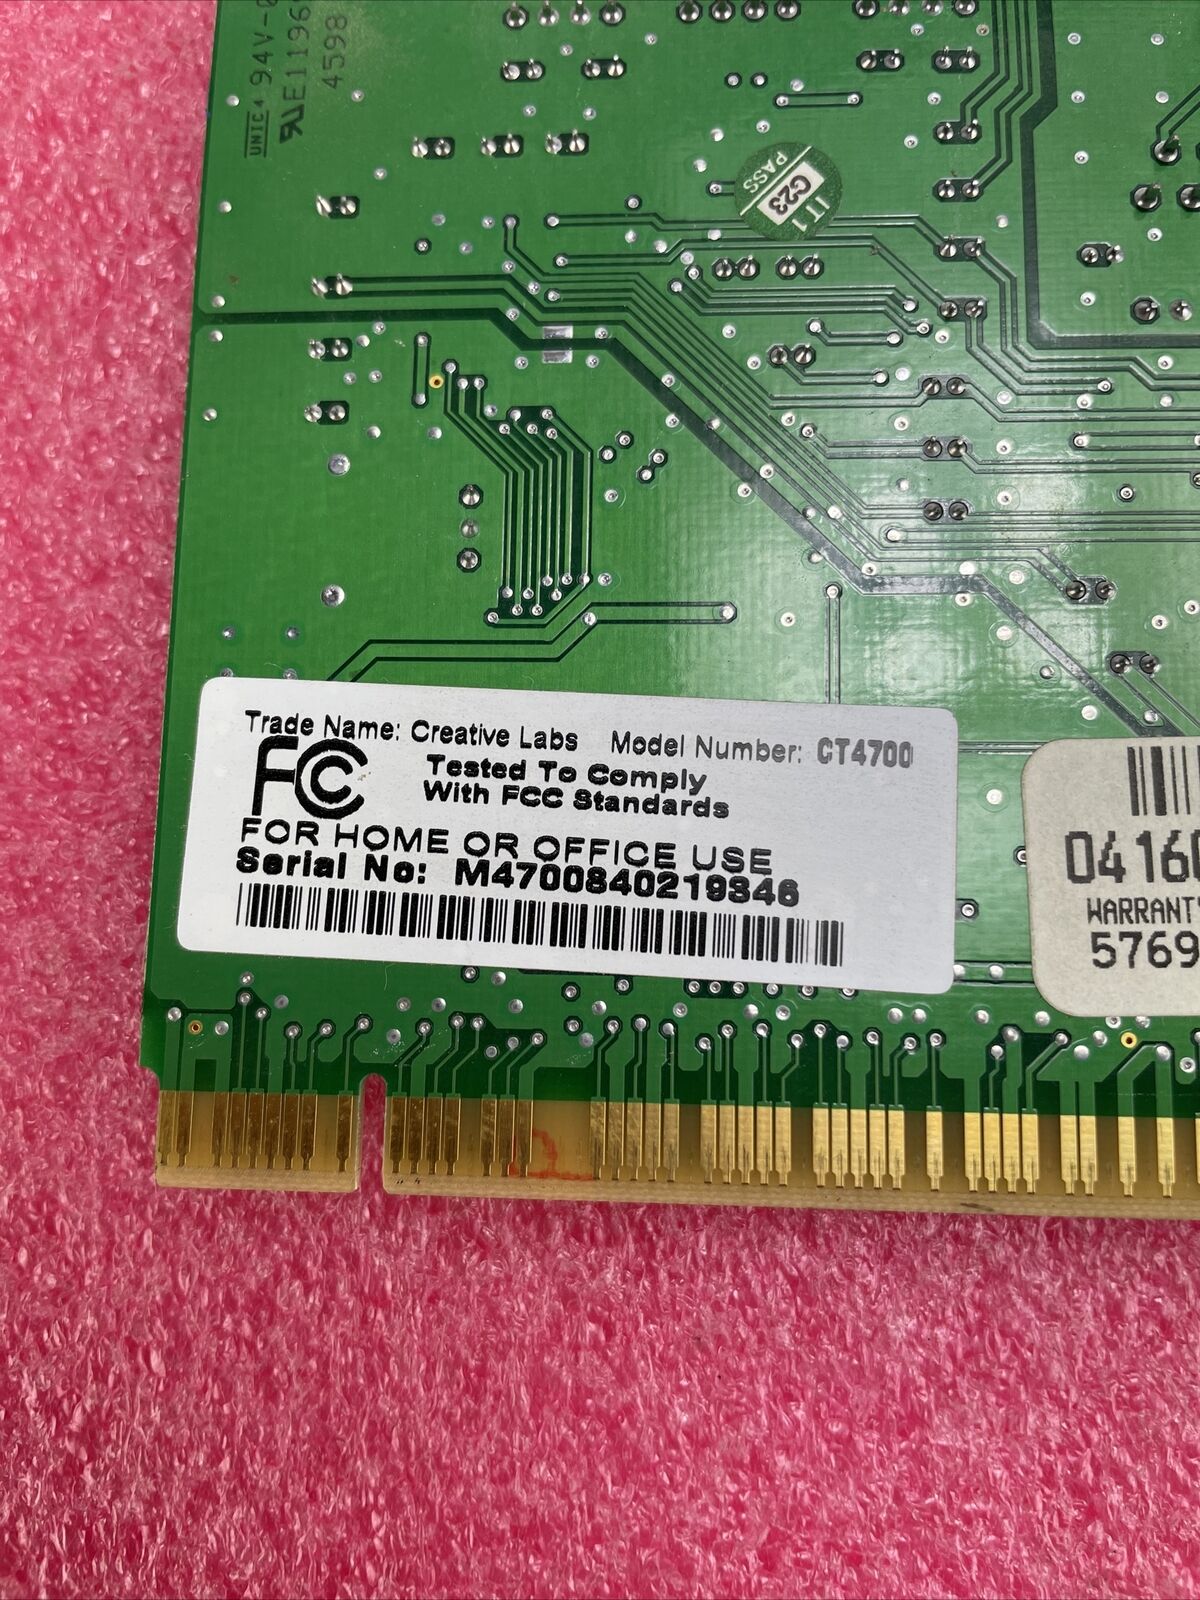 Creative Labs Sound Blaster PCI128 CT4700 PCI Audio Card